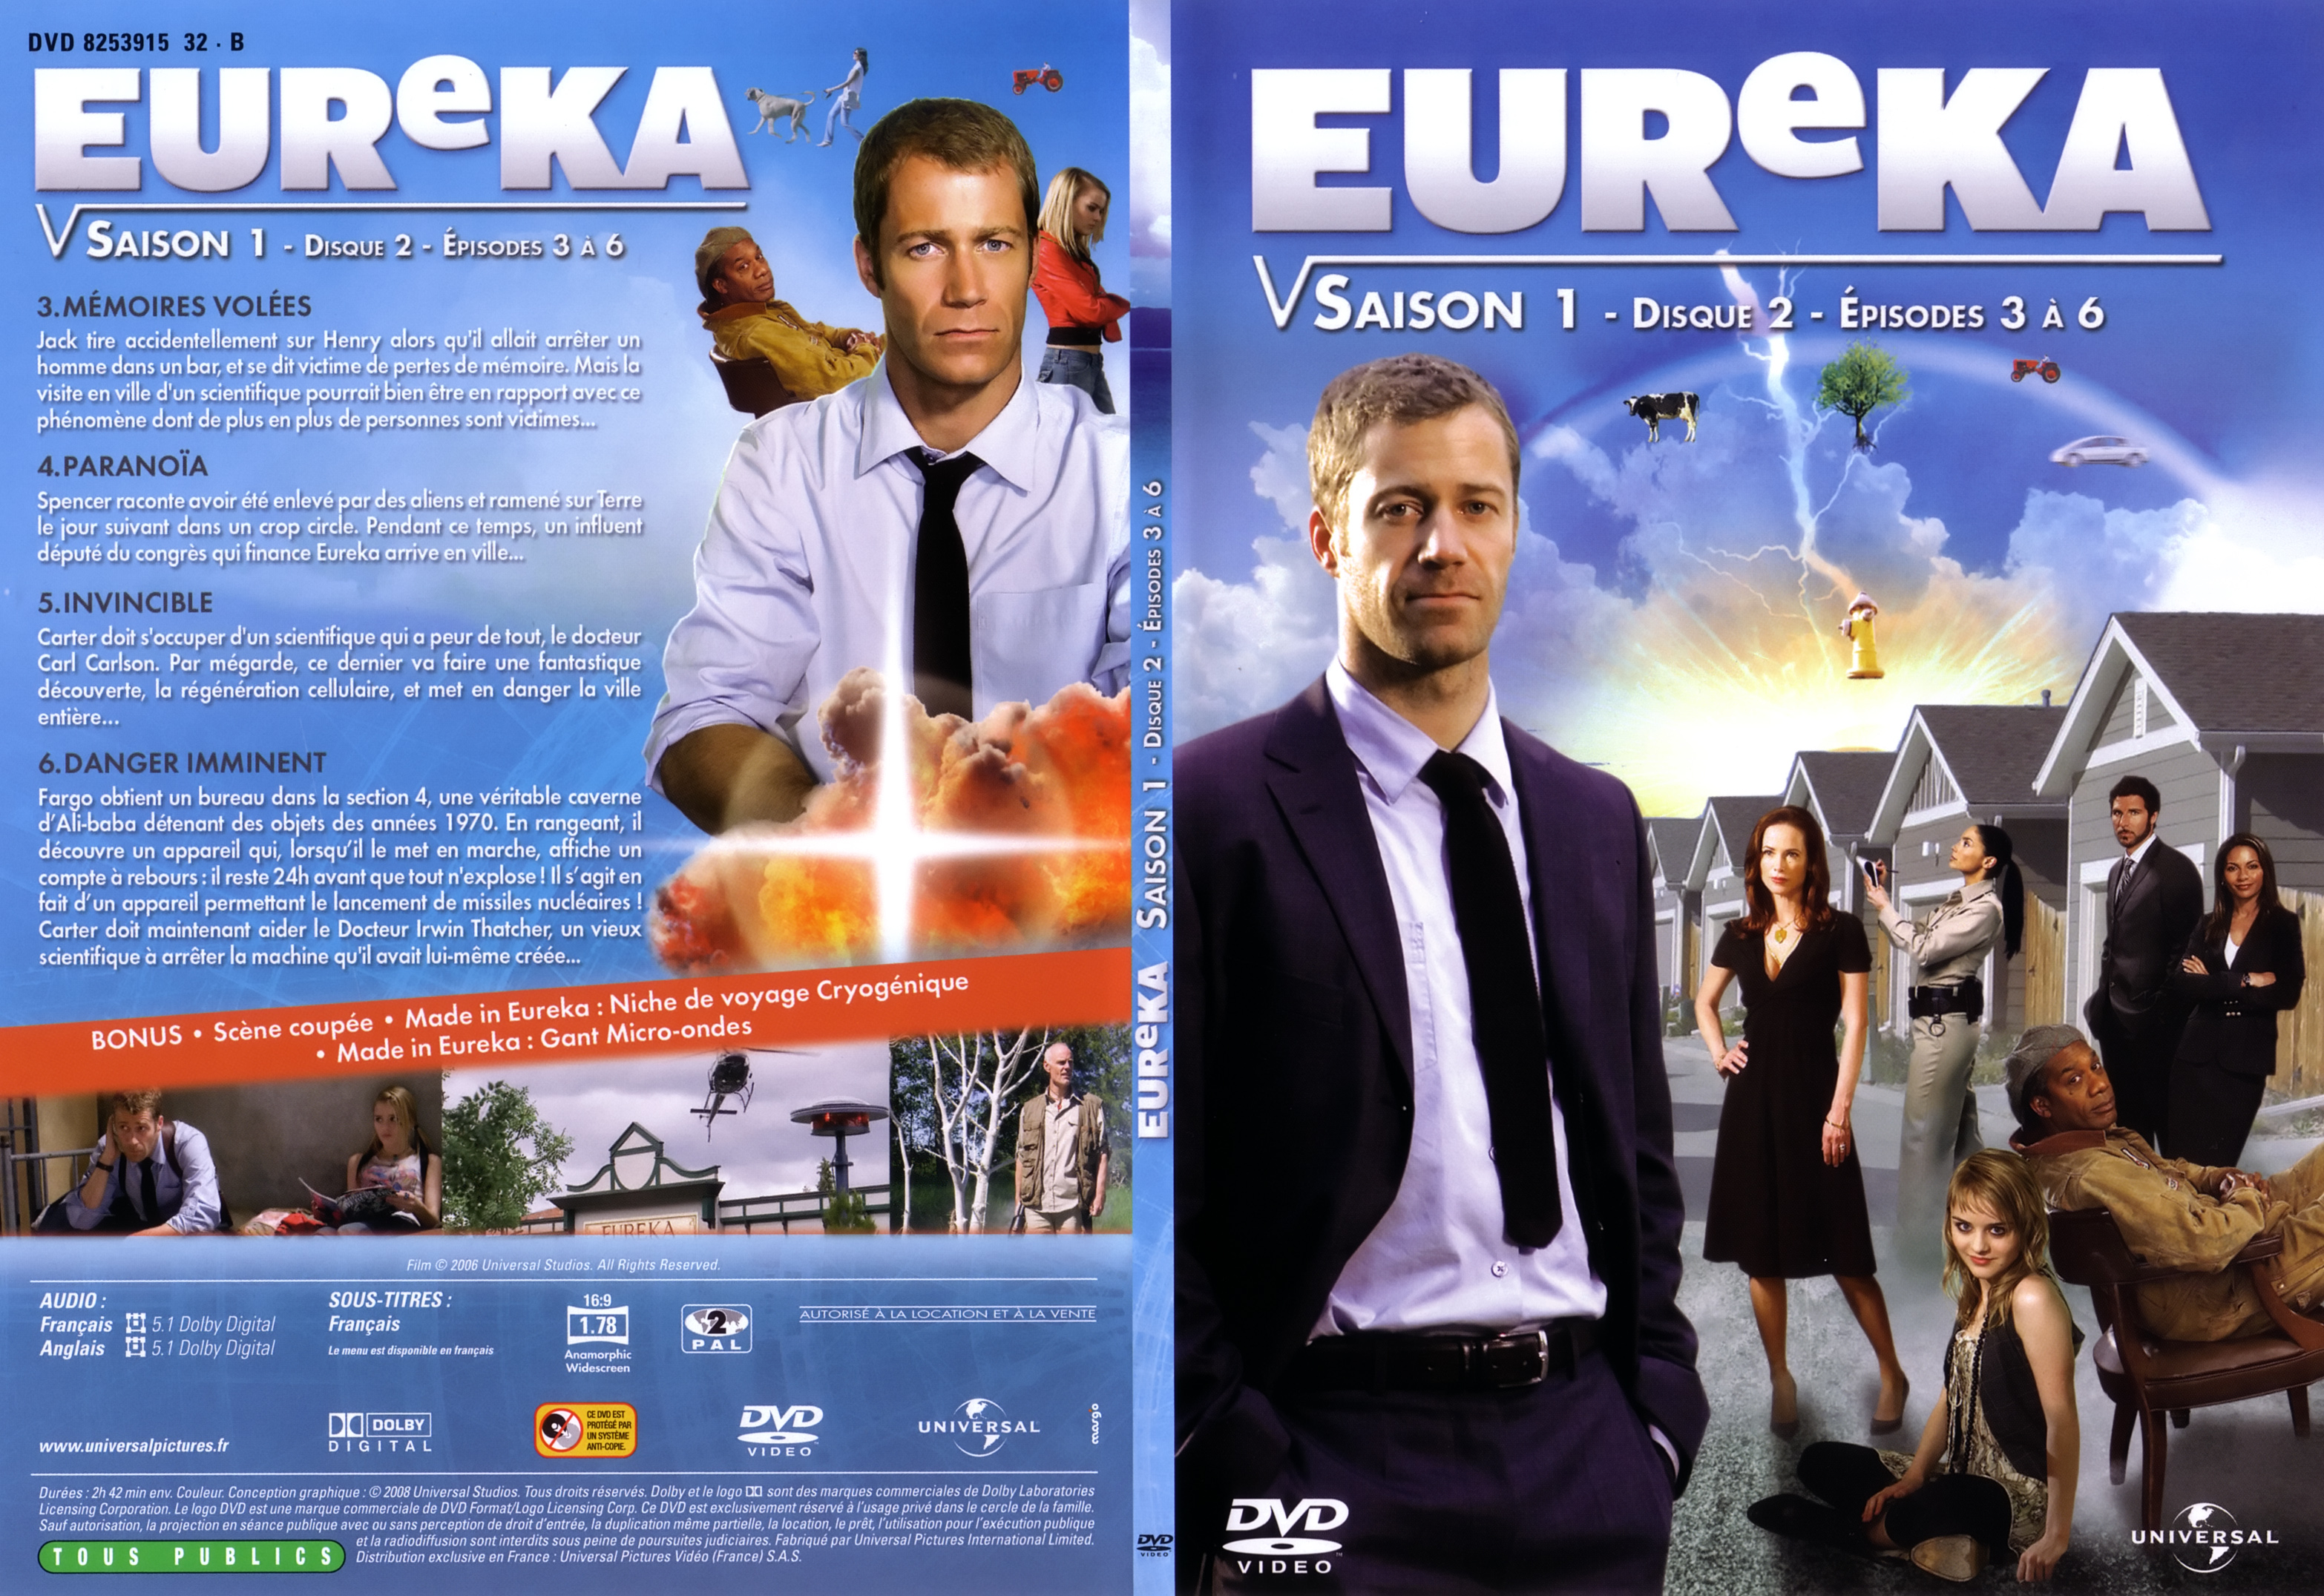 Jaquette DVD Eureka saison 1 DVD 2